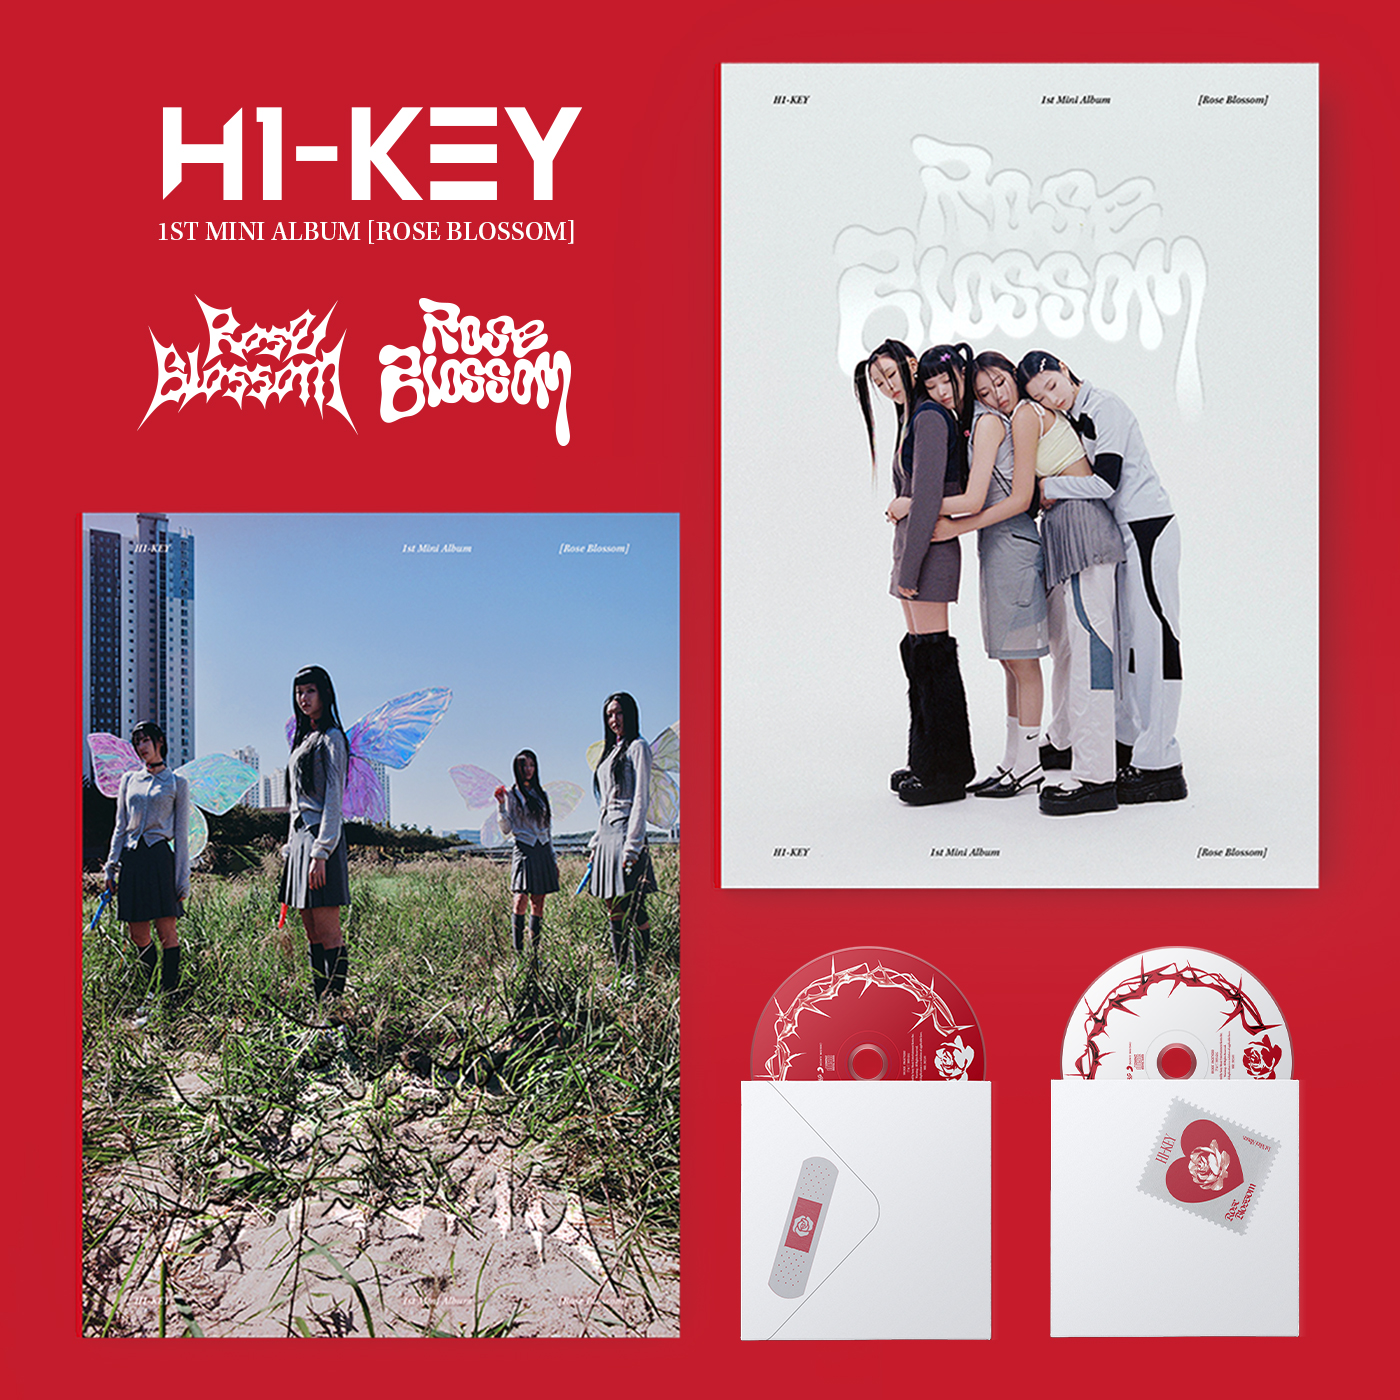 H1-KEY - 1st Mini Album [Rose Blossom] (Random Ver.)